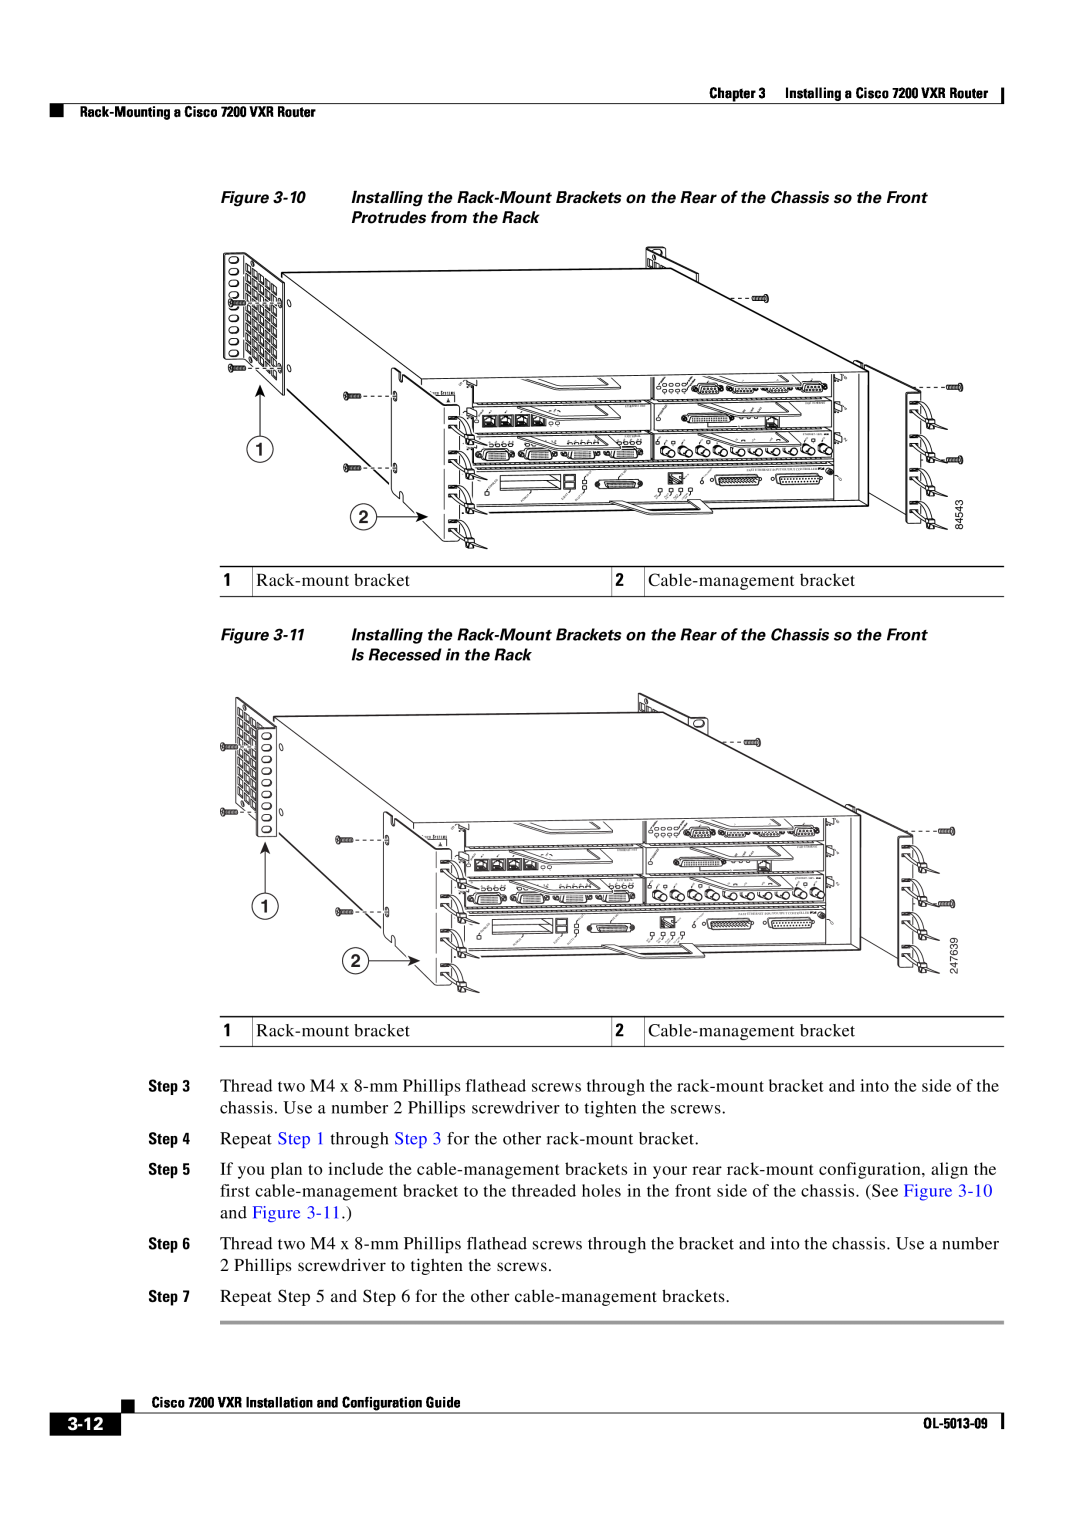 Cisco Systems 7200 VXR manual 3-12, Cisco, Series, Link, RJ45 